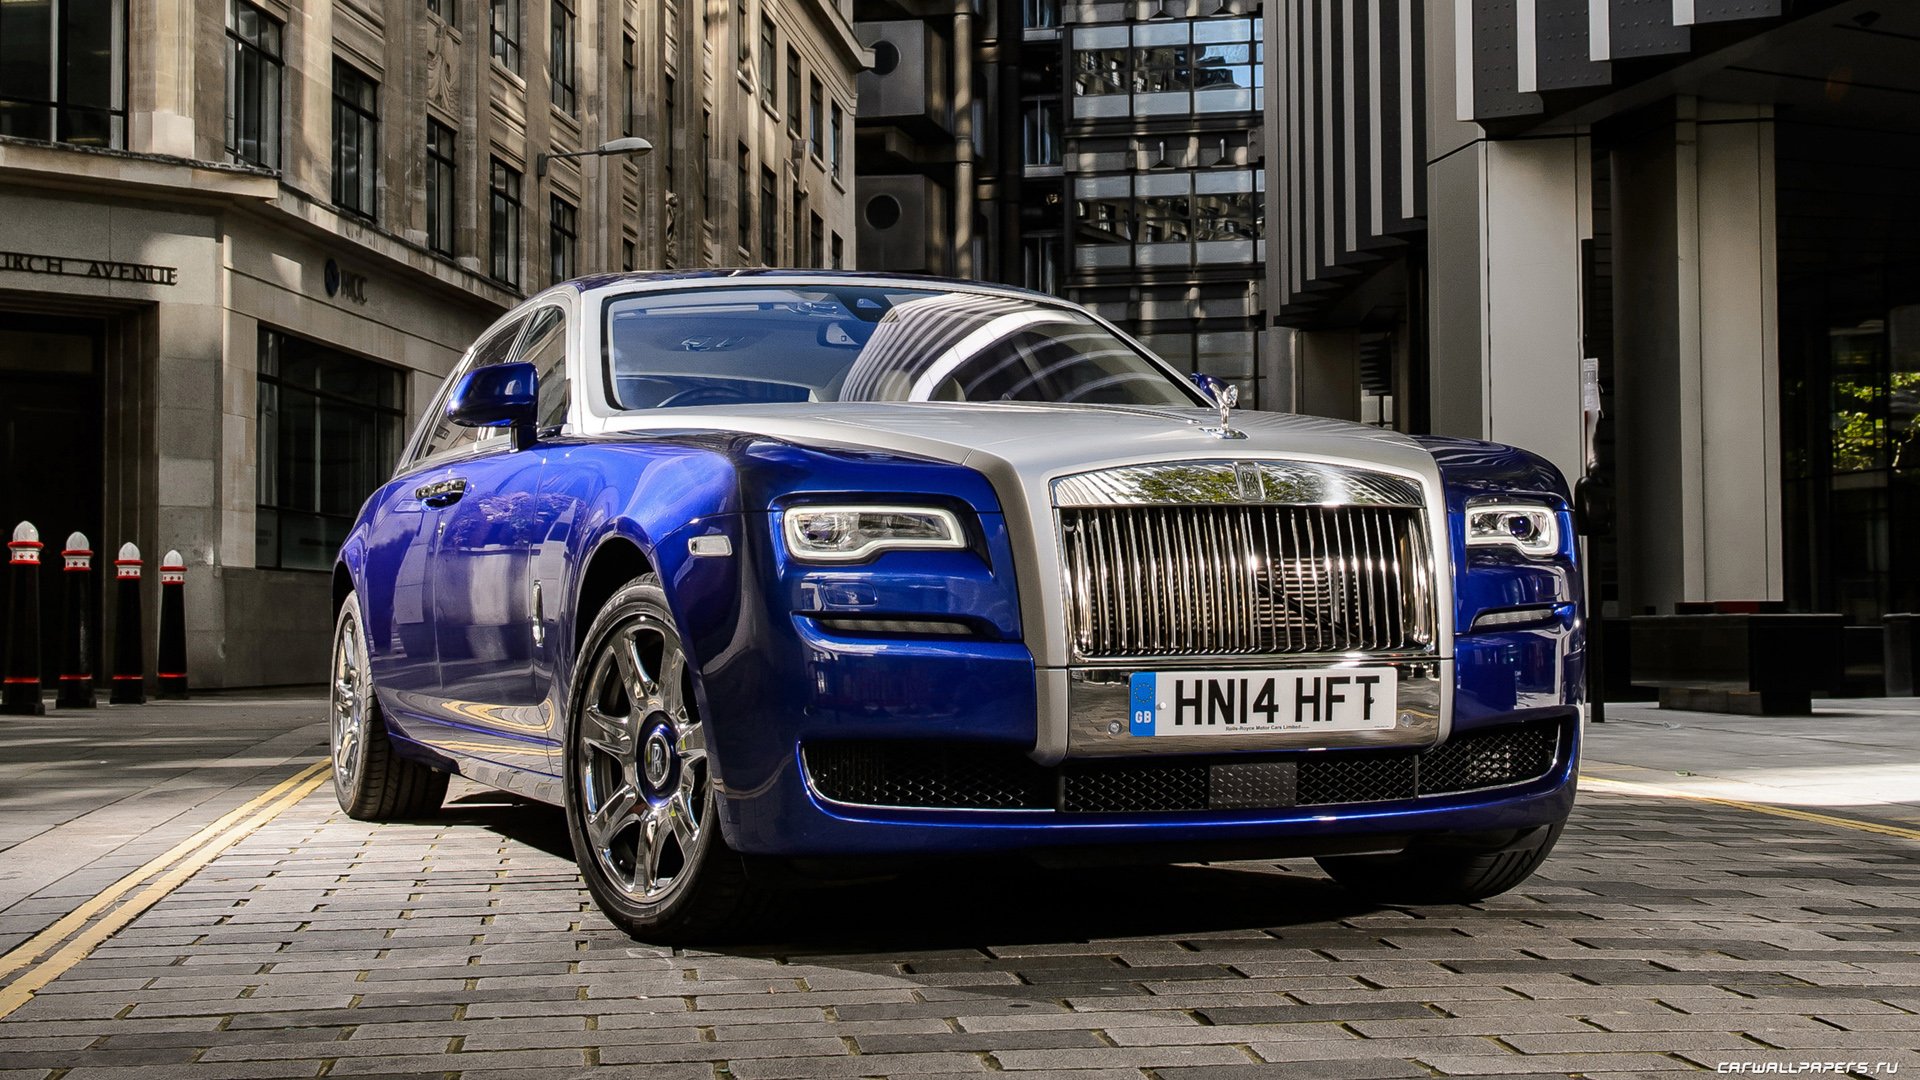 Автомобиль роллс ройс. Машина Роллс Ройс. Rolls Royce Ghost 2015. Rols Royals. Rolls Royce машина Rolls Royce.